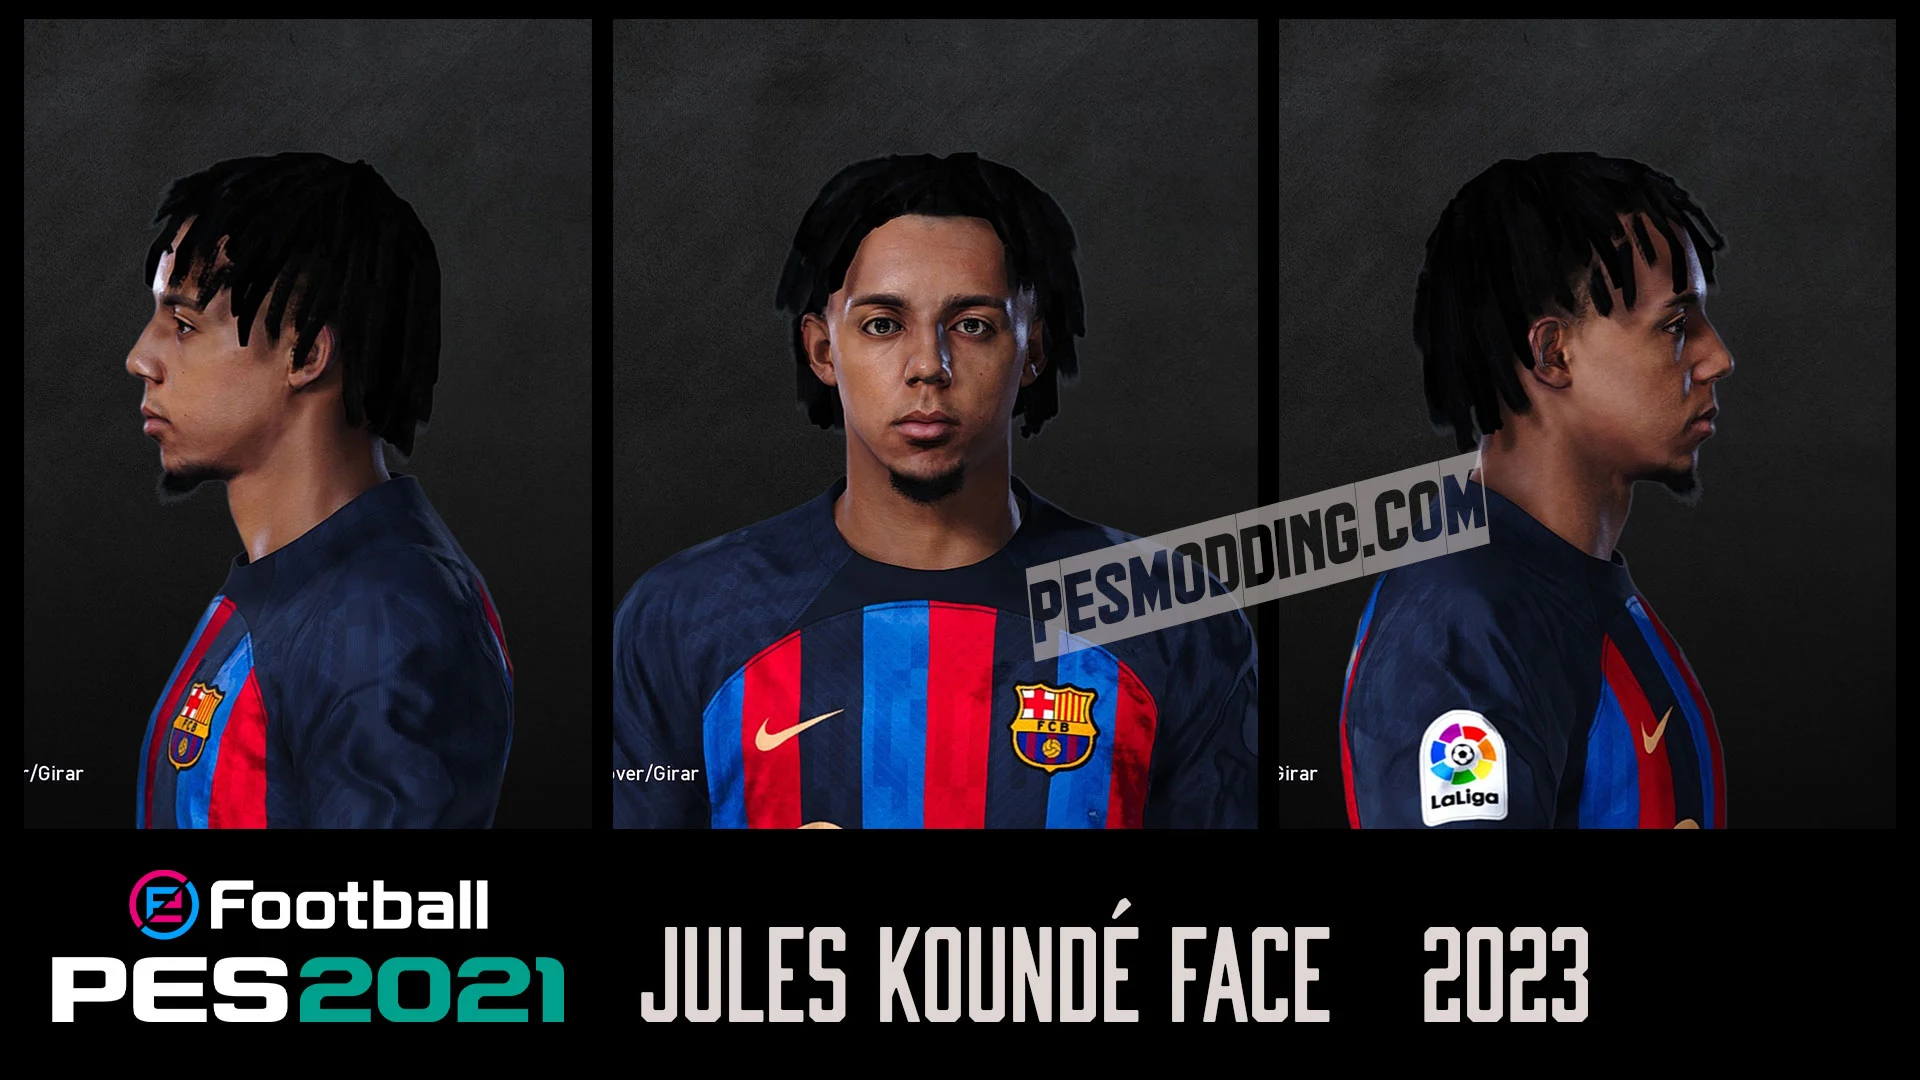 PES 2021 Jules Koundé Face Update 2023